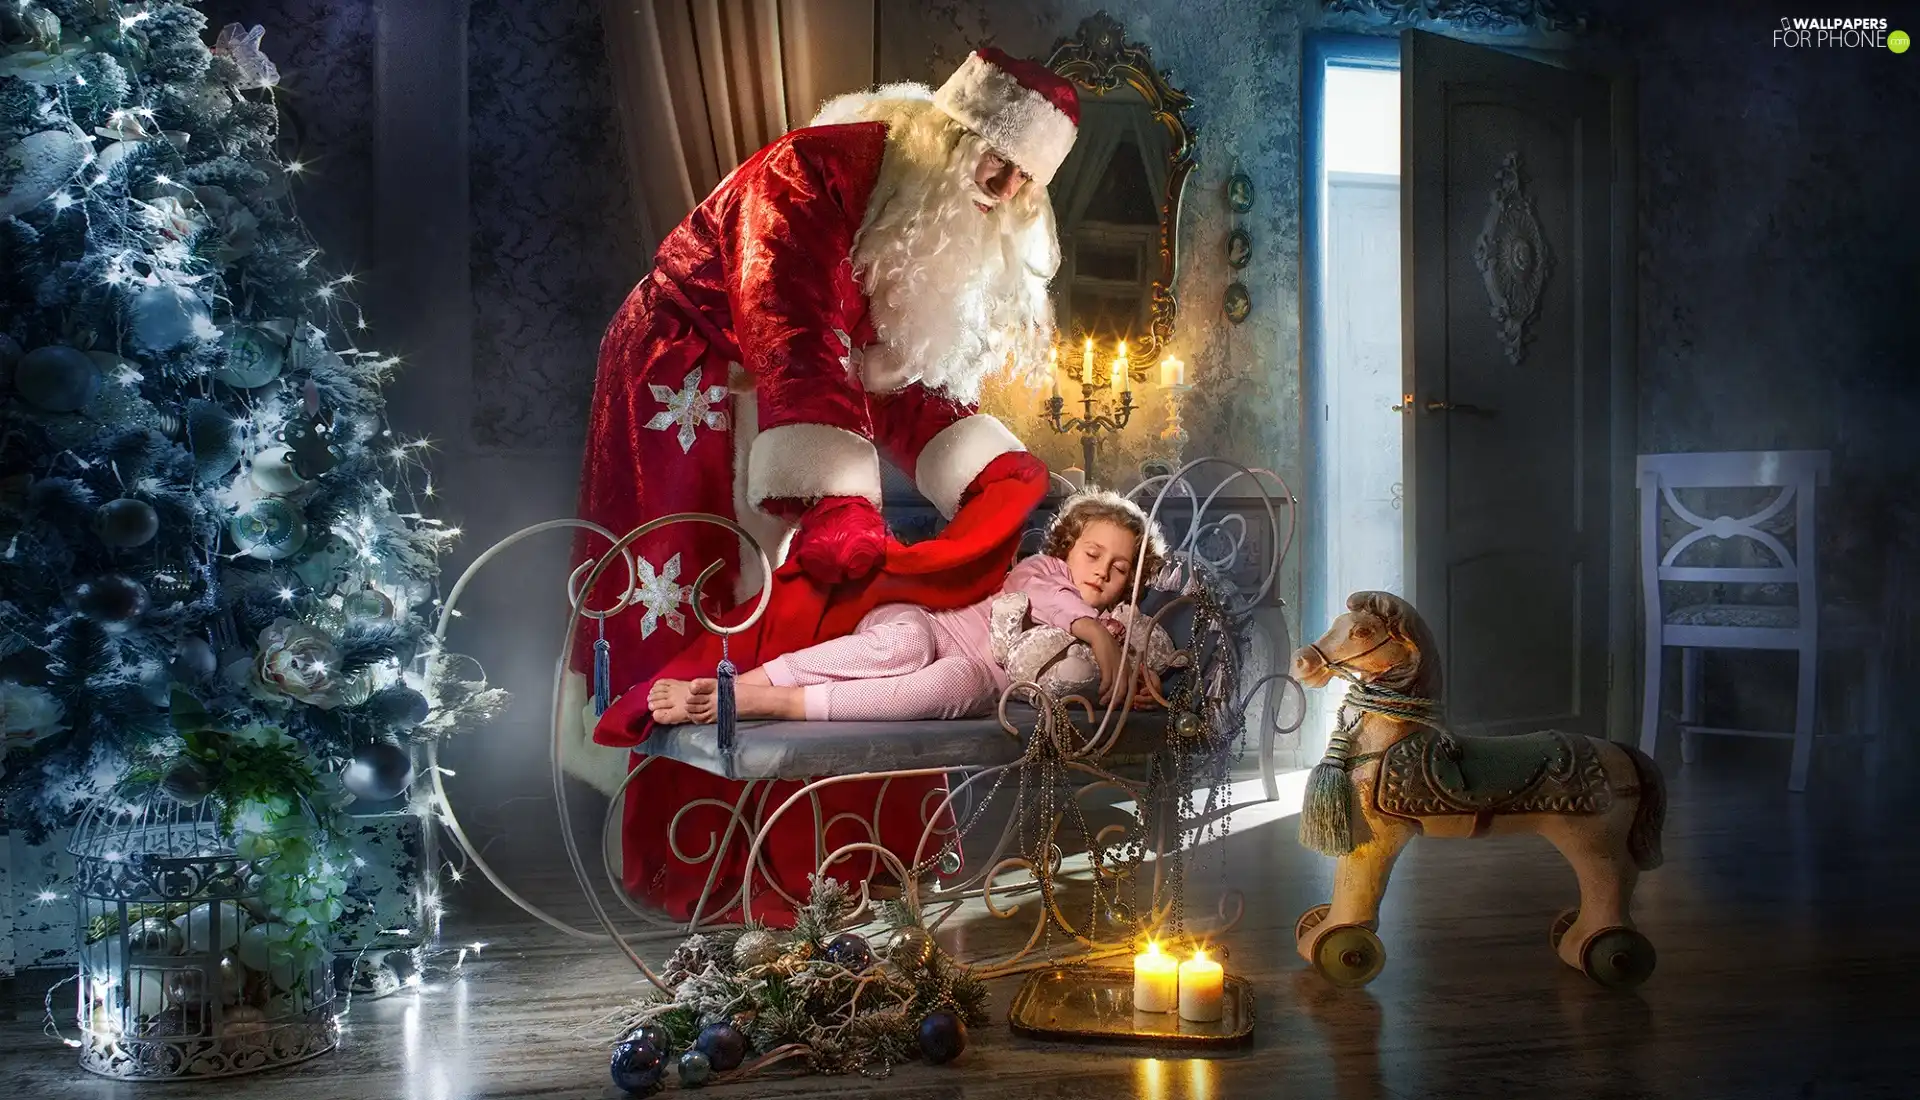 christmas tree, Santa, sea-horse, toy, candles, sleigh, White Bed, dream, girl, headdress, teddy bear